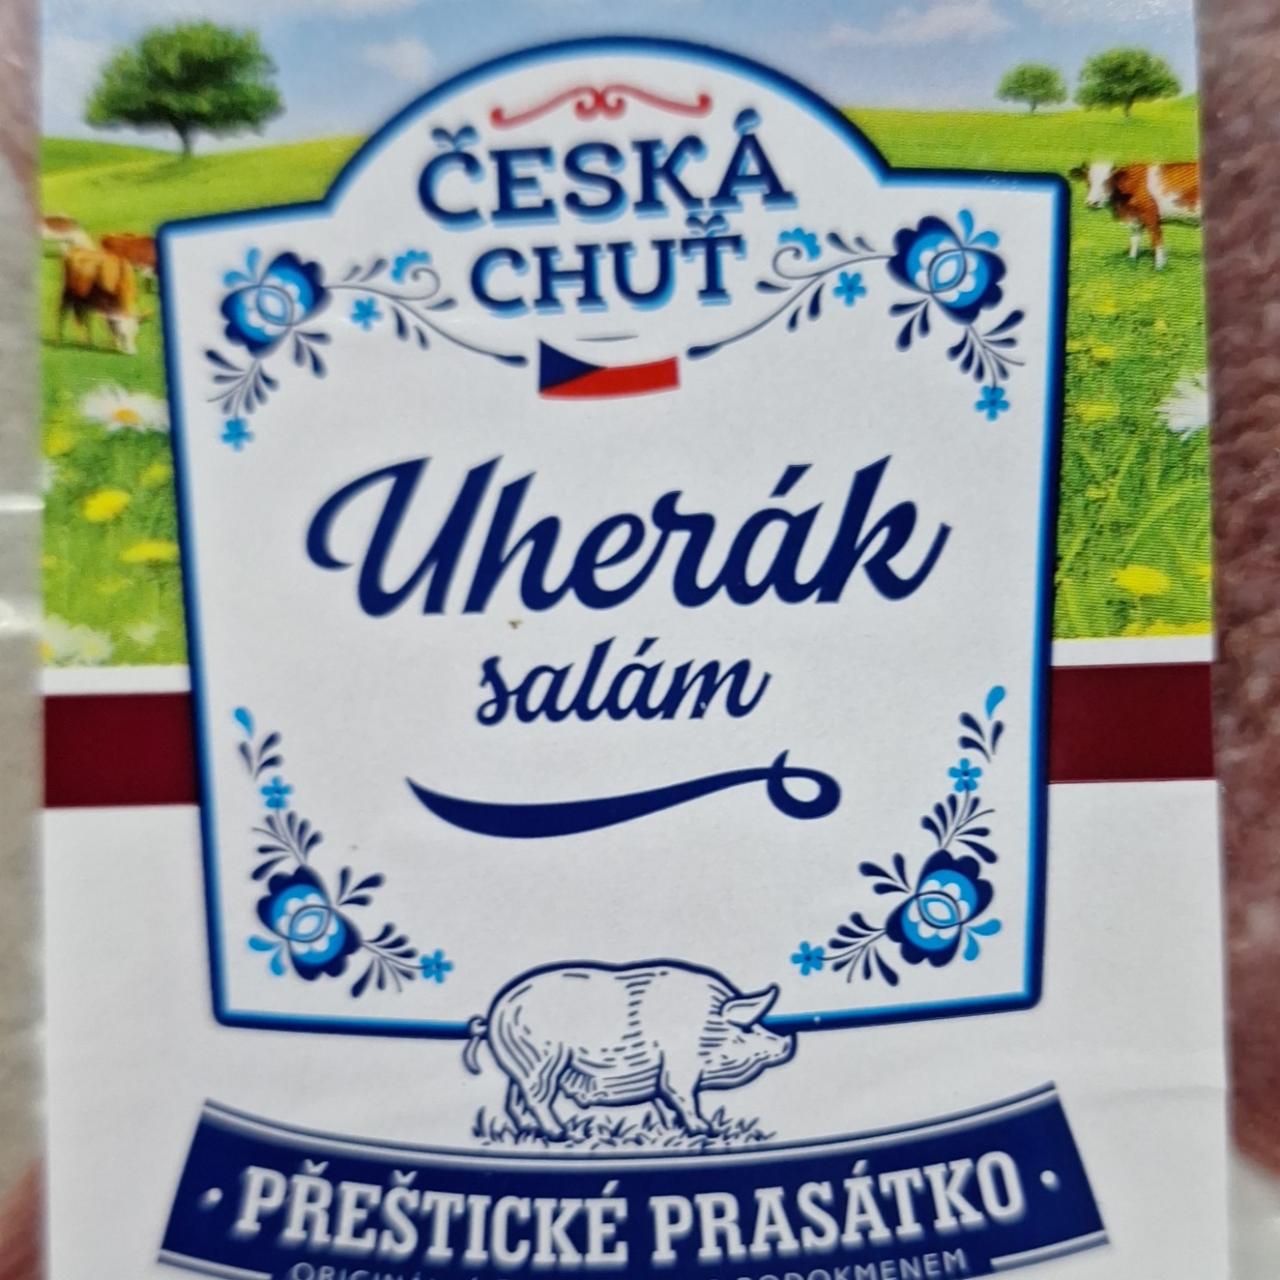 Fotografie - Uherák salám Česká chuť